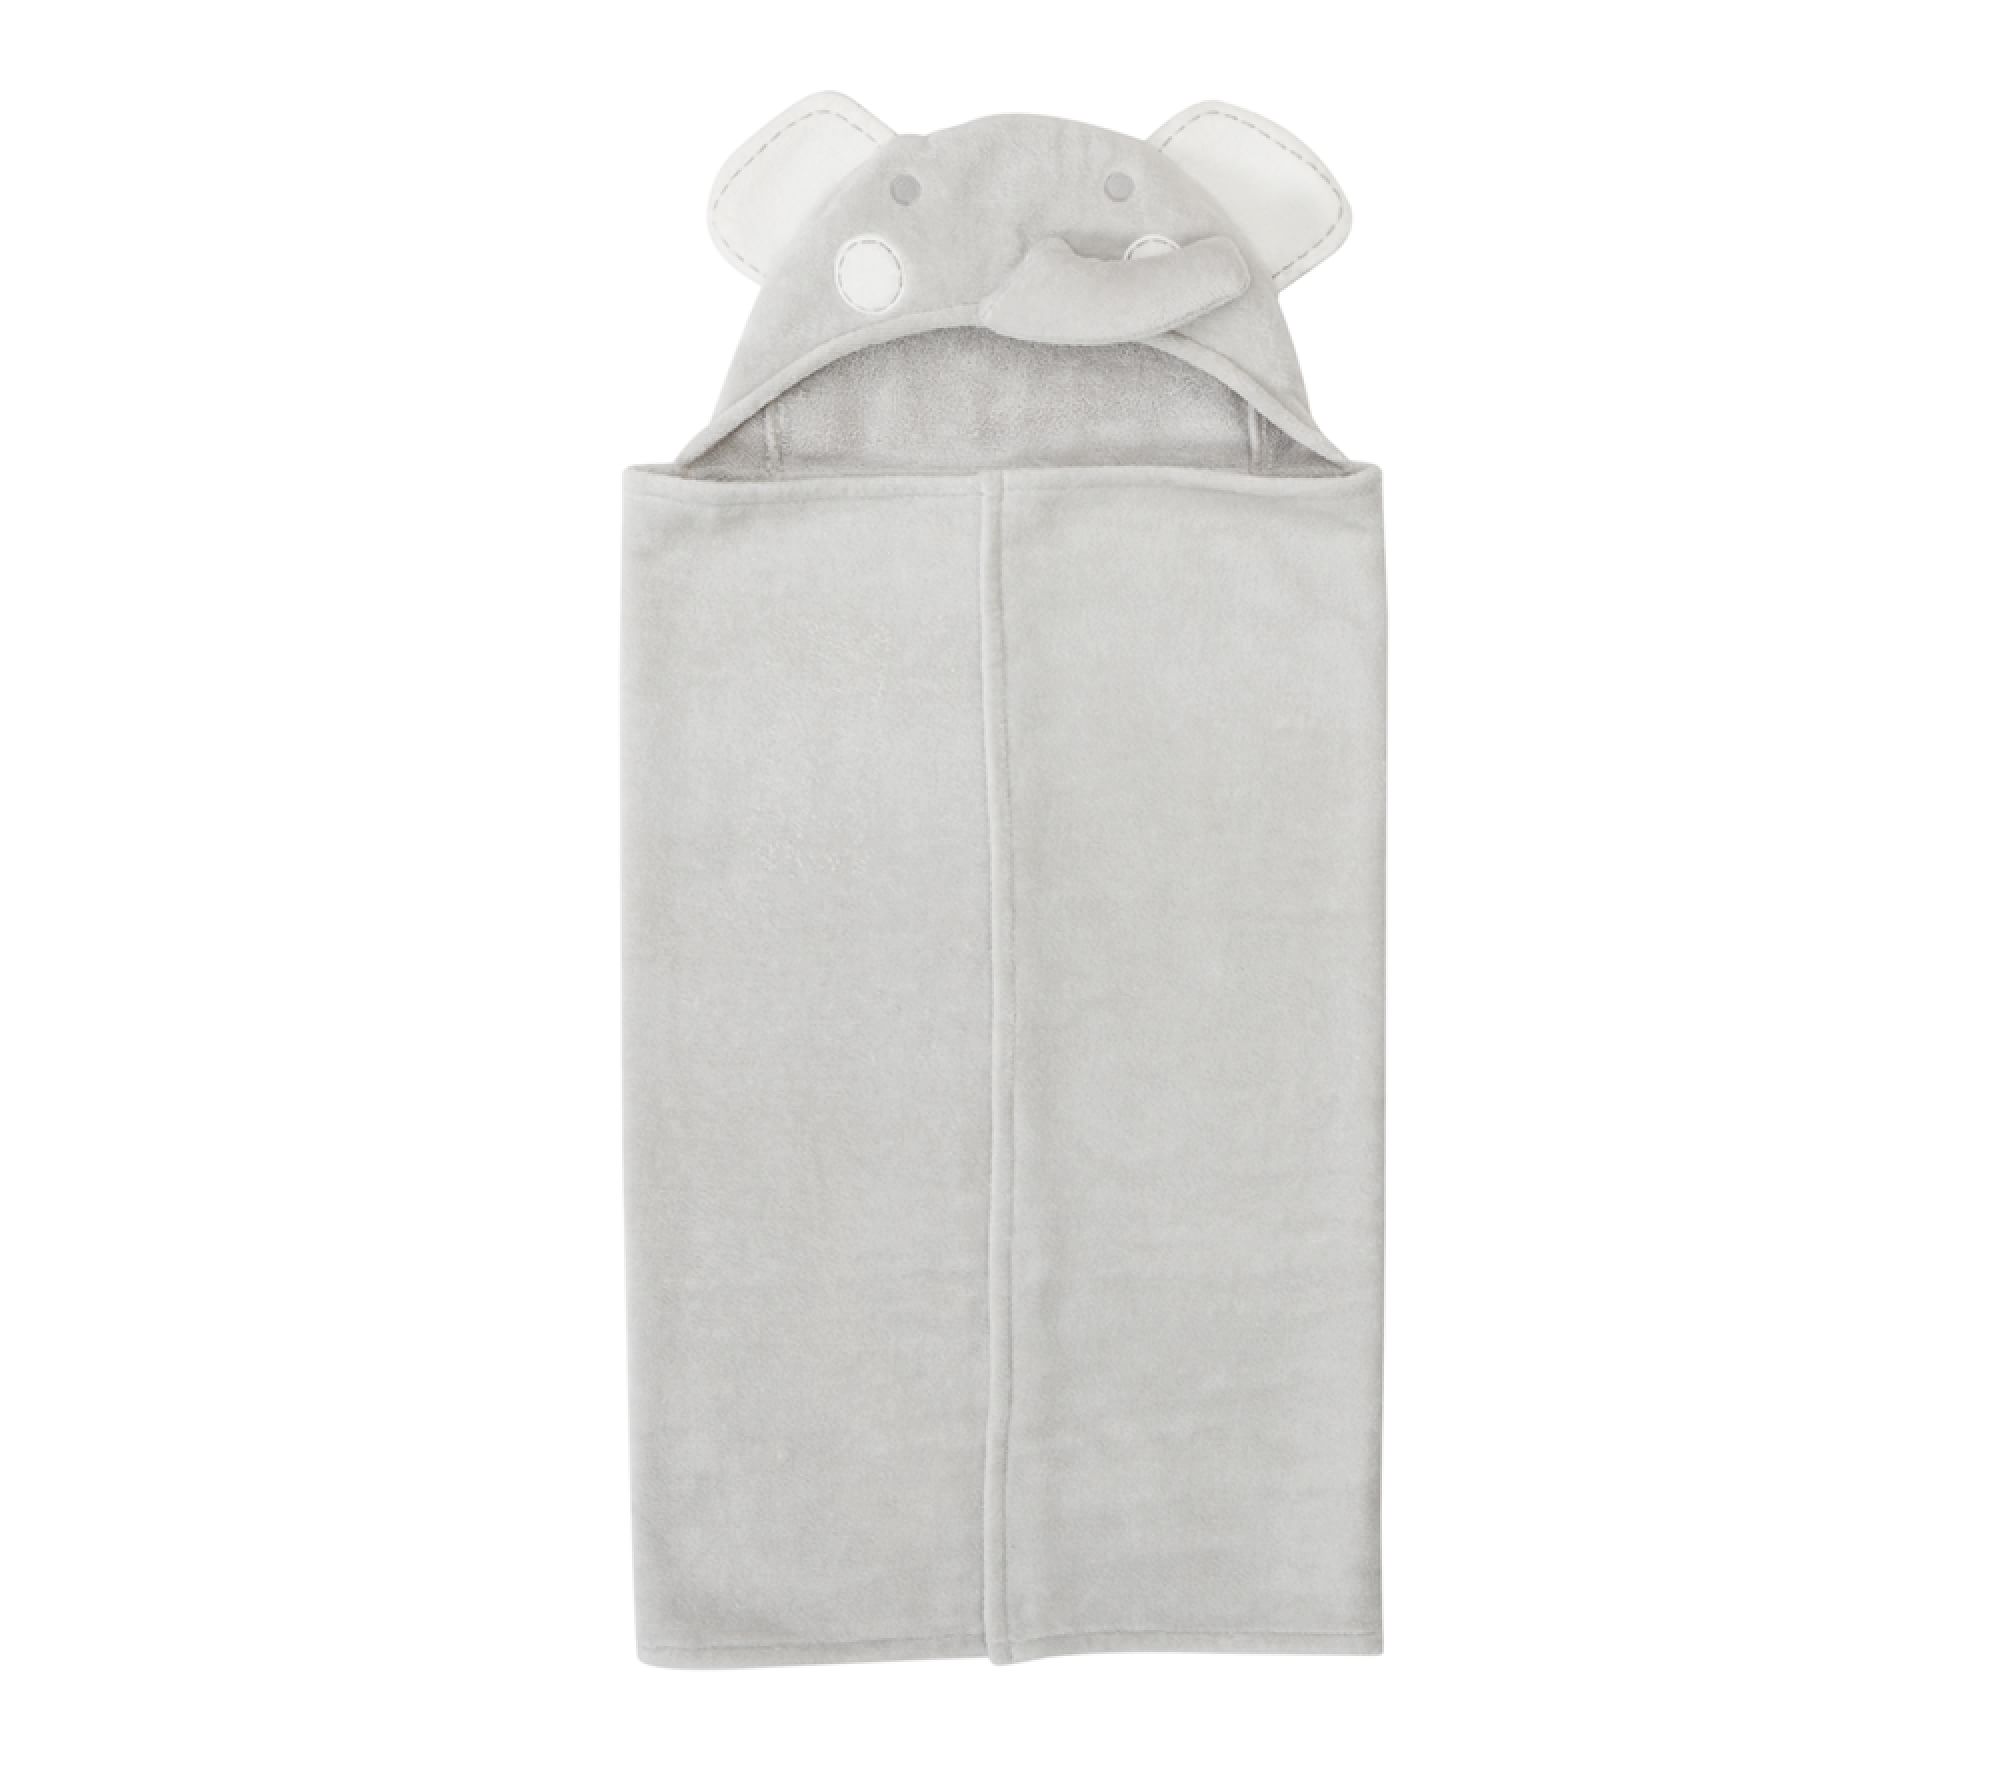 Elephant Baby Hooded Towel